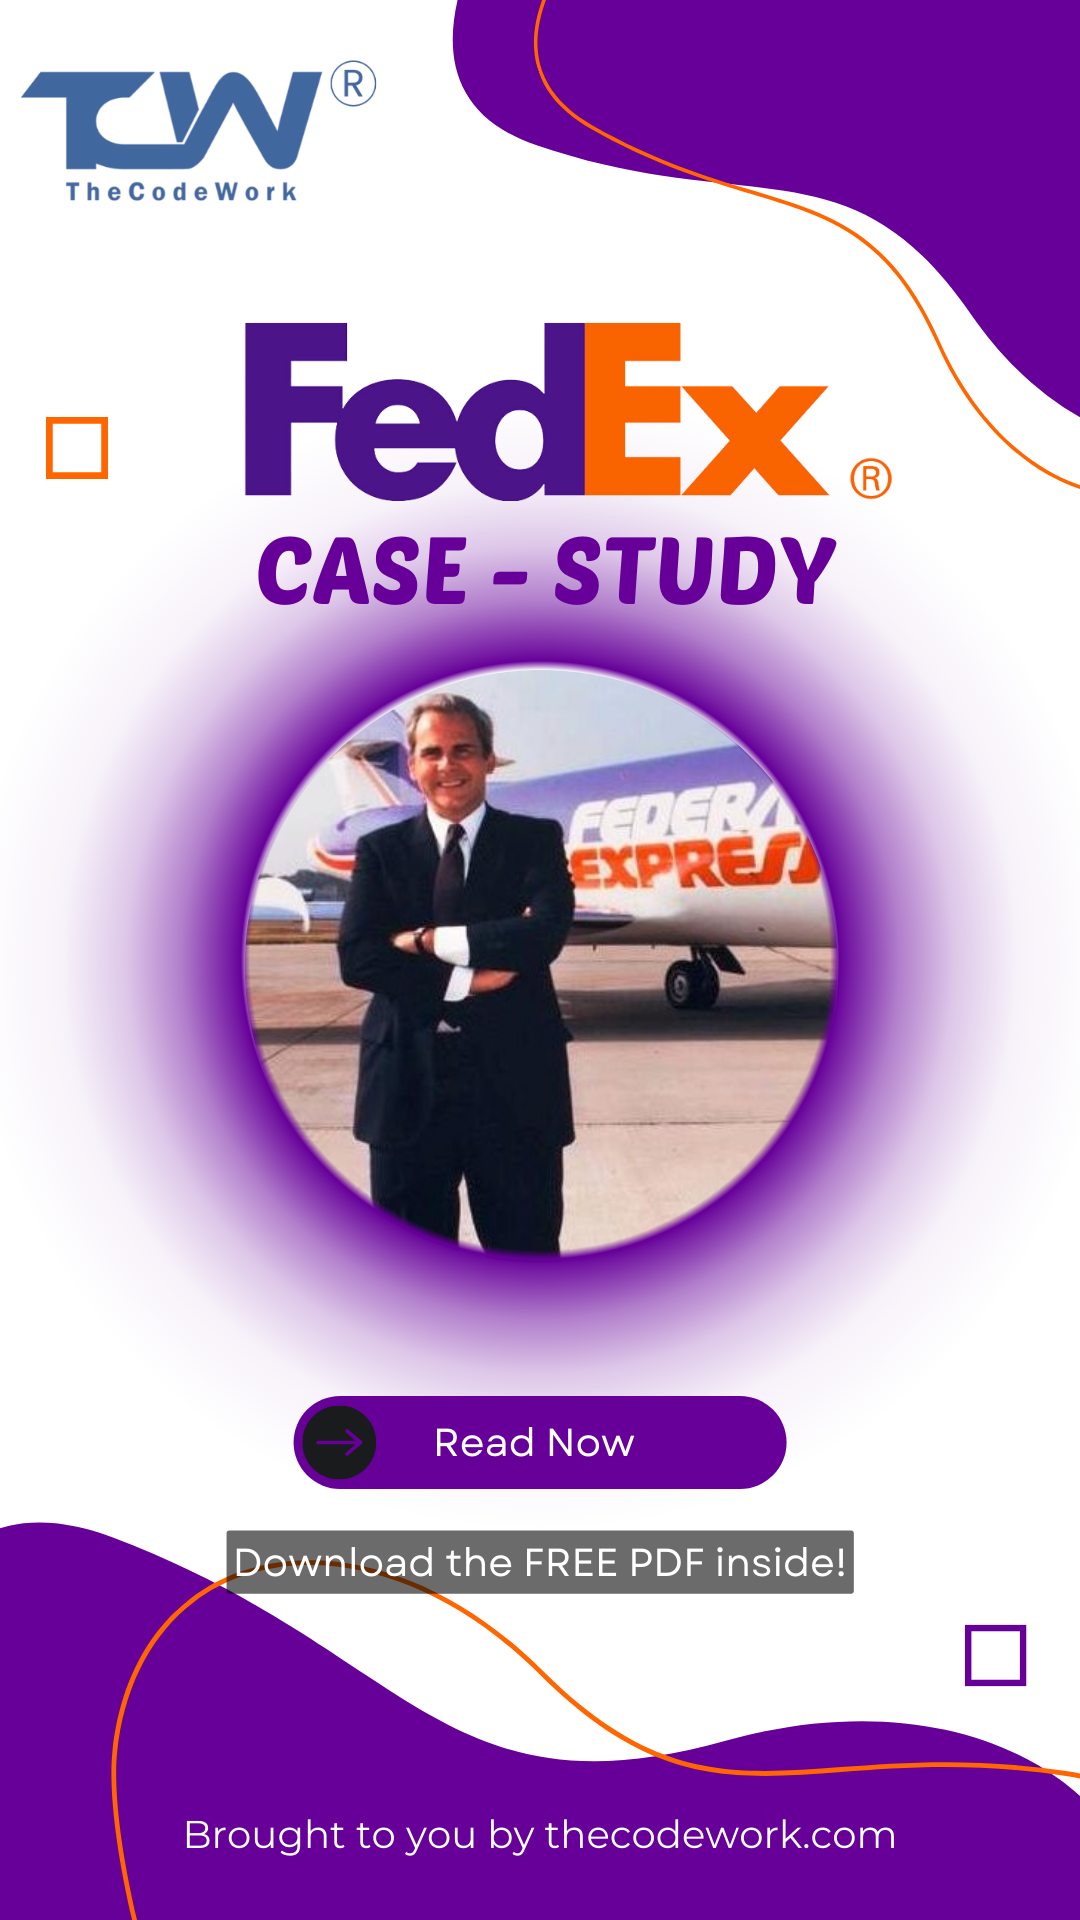 fedex business model case study